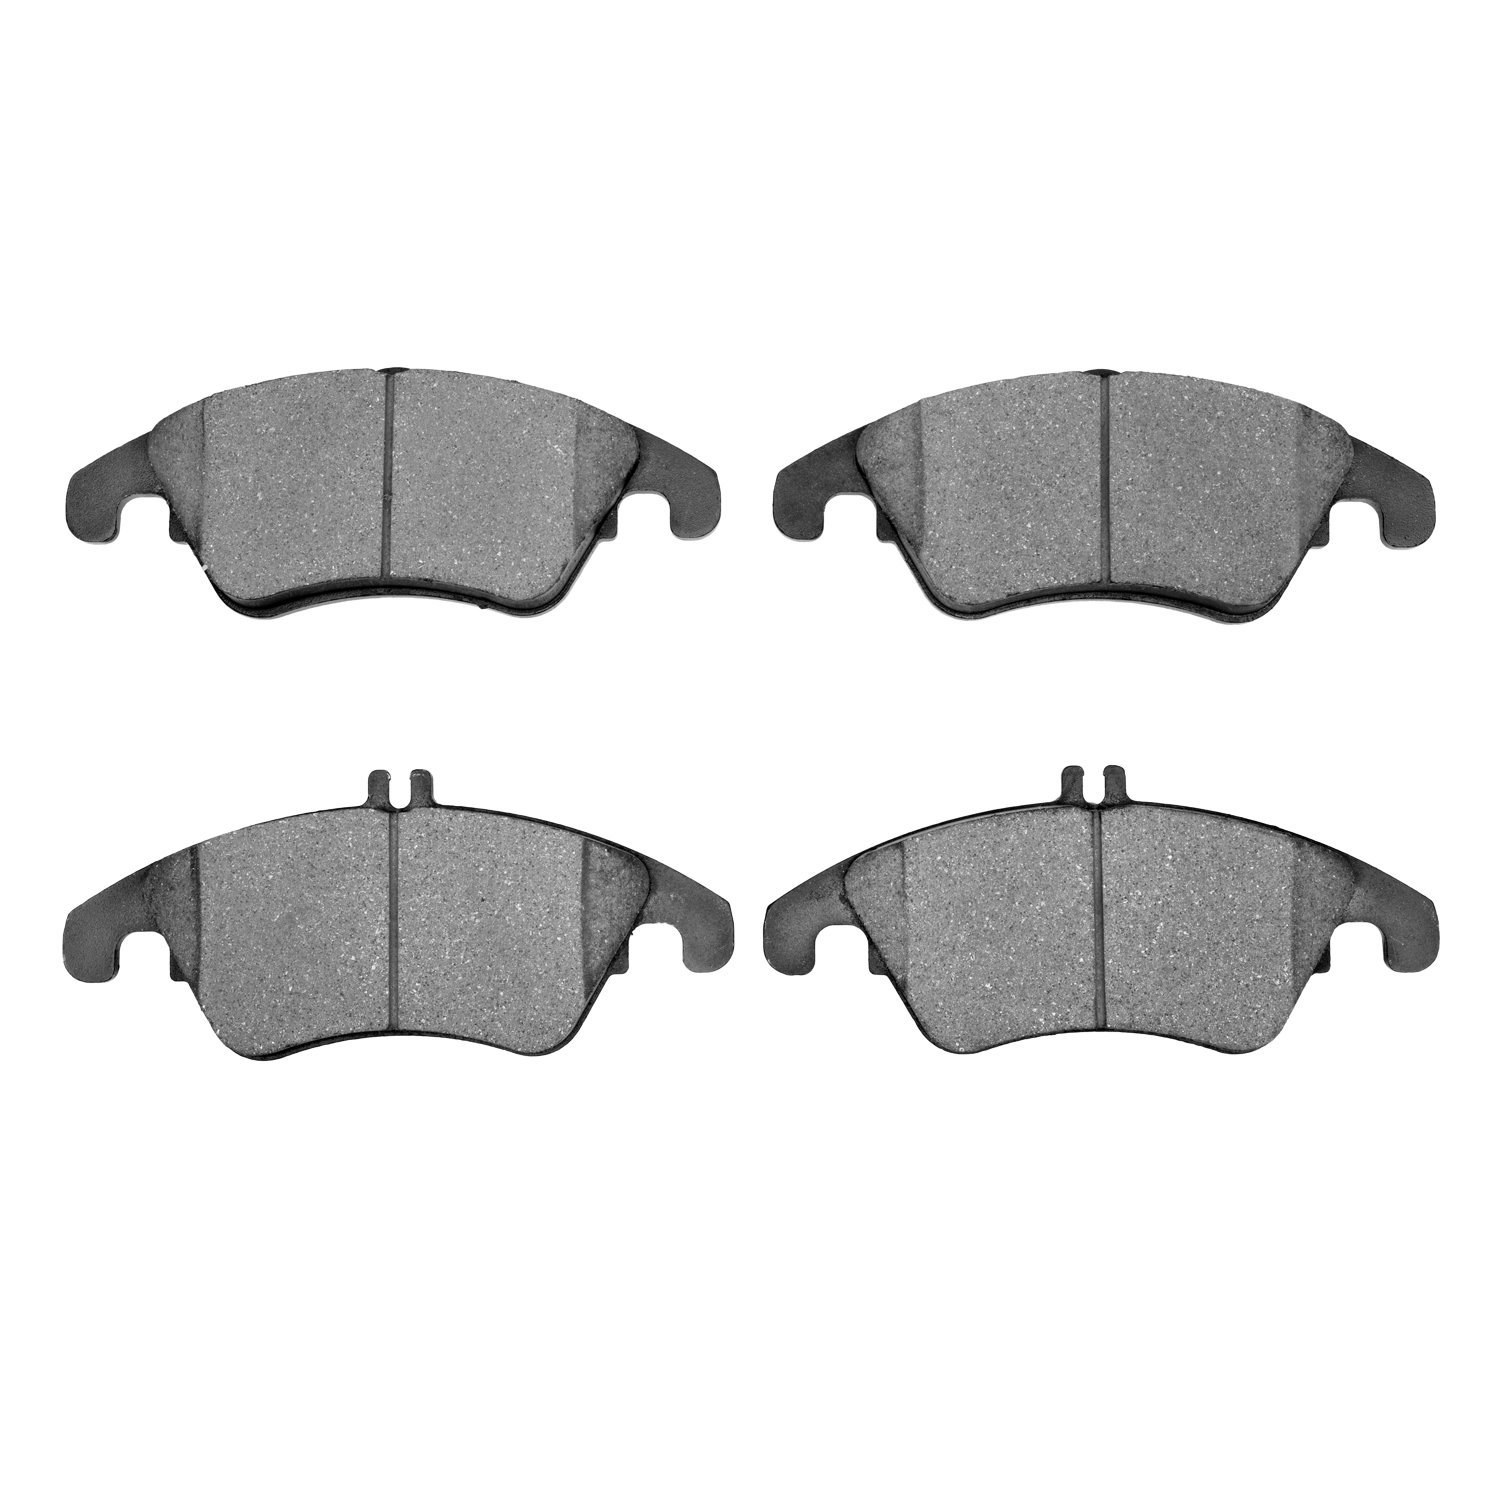 1600-1342-00 5000 Euro Ceramic Brake Pads, 2008-2020 Mercedes-Benz, Position: Front